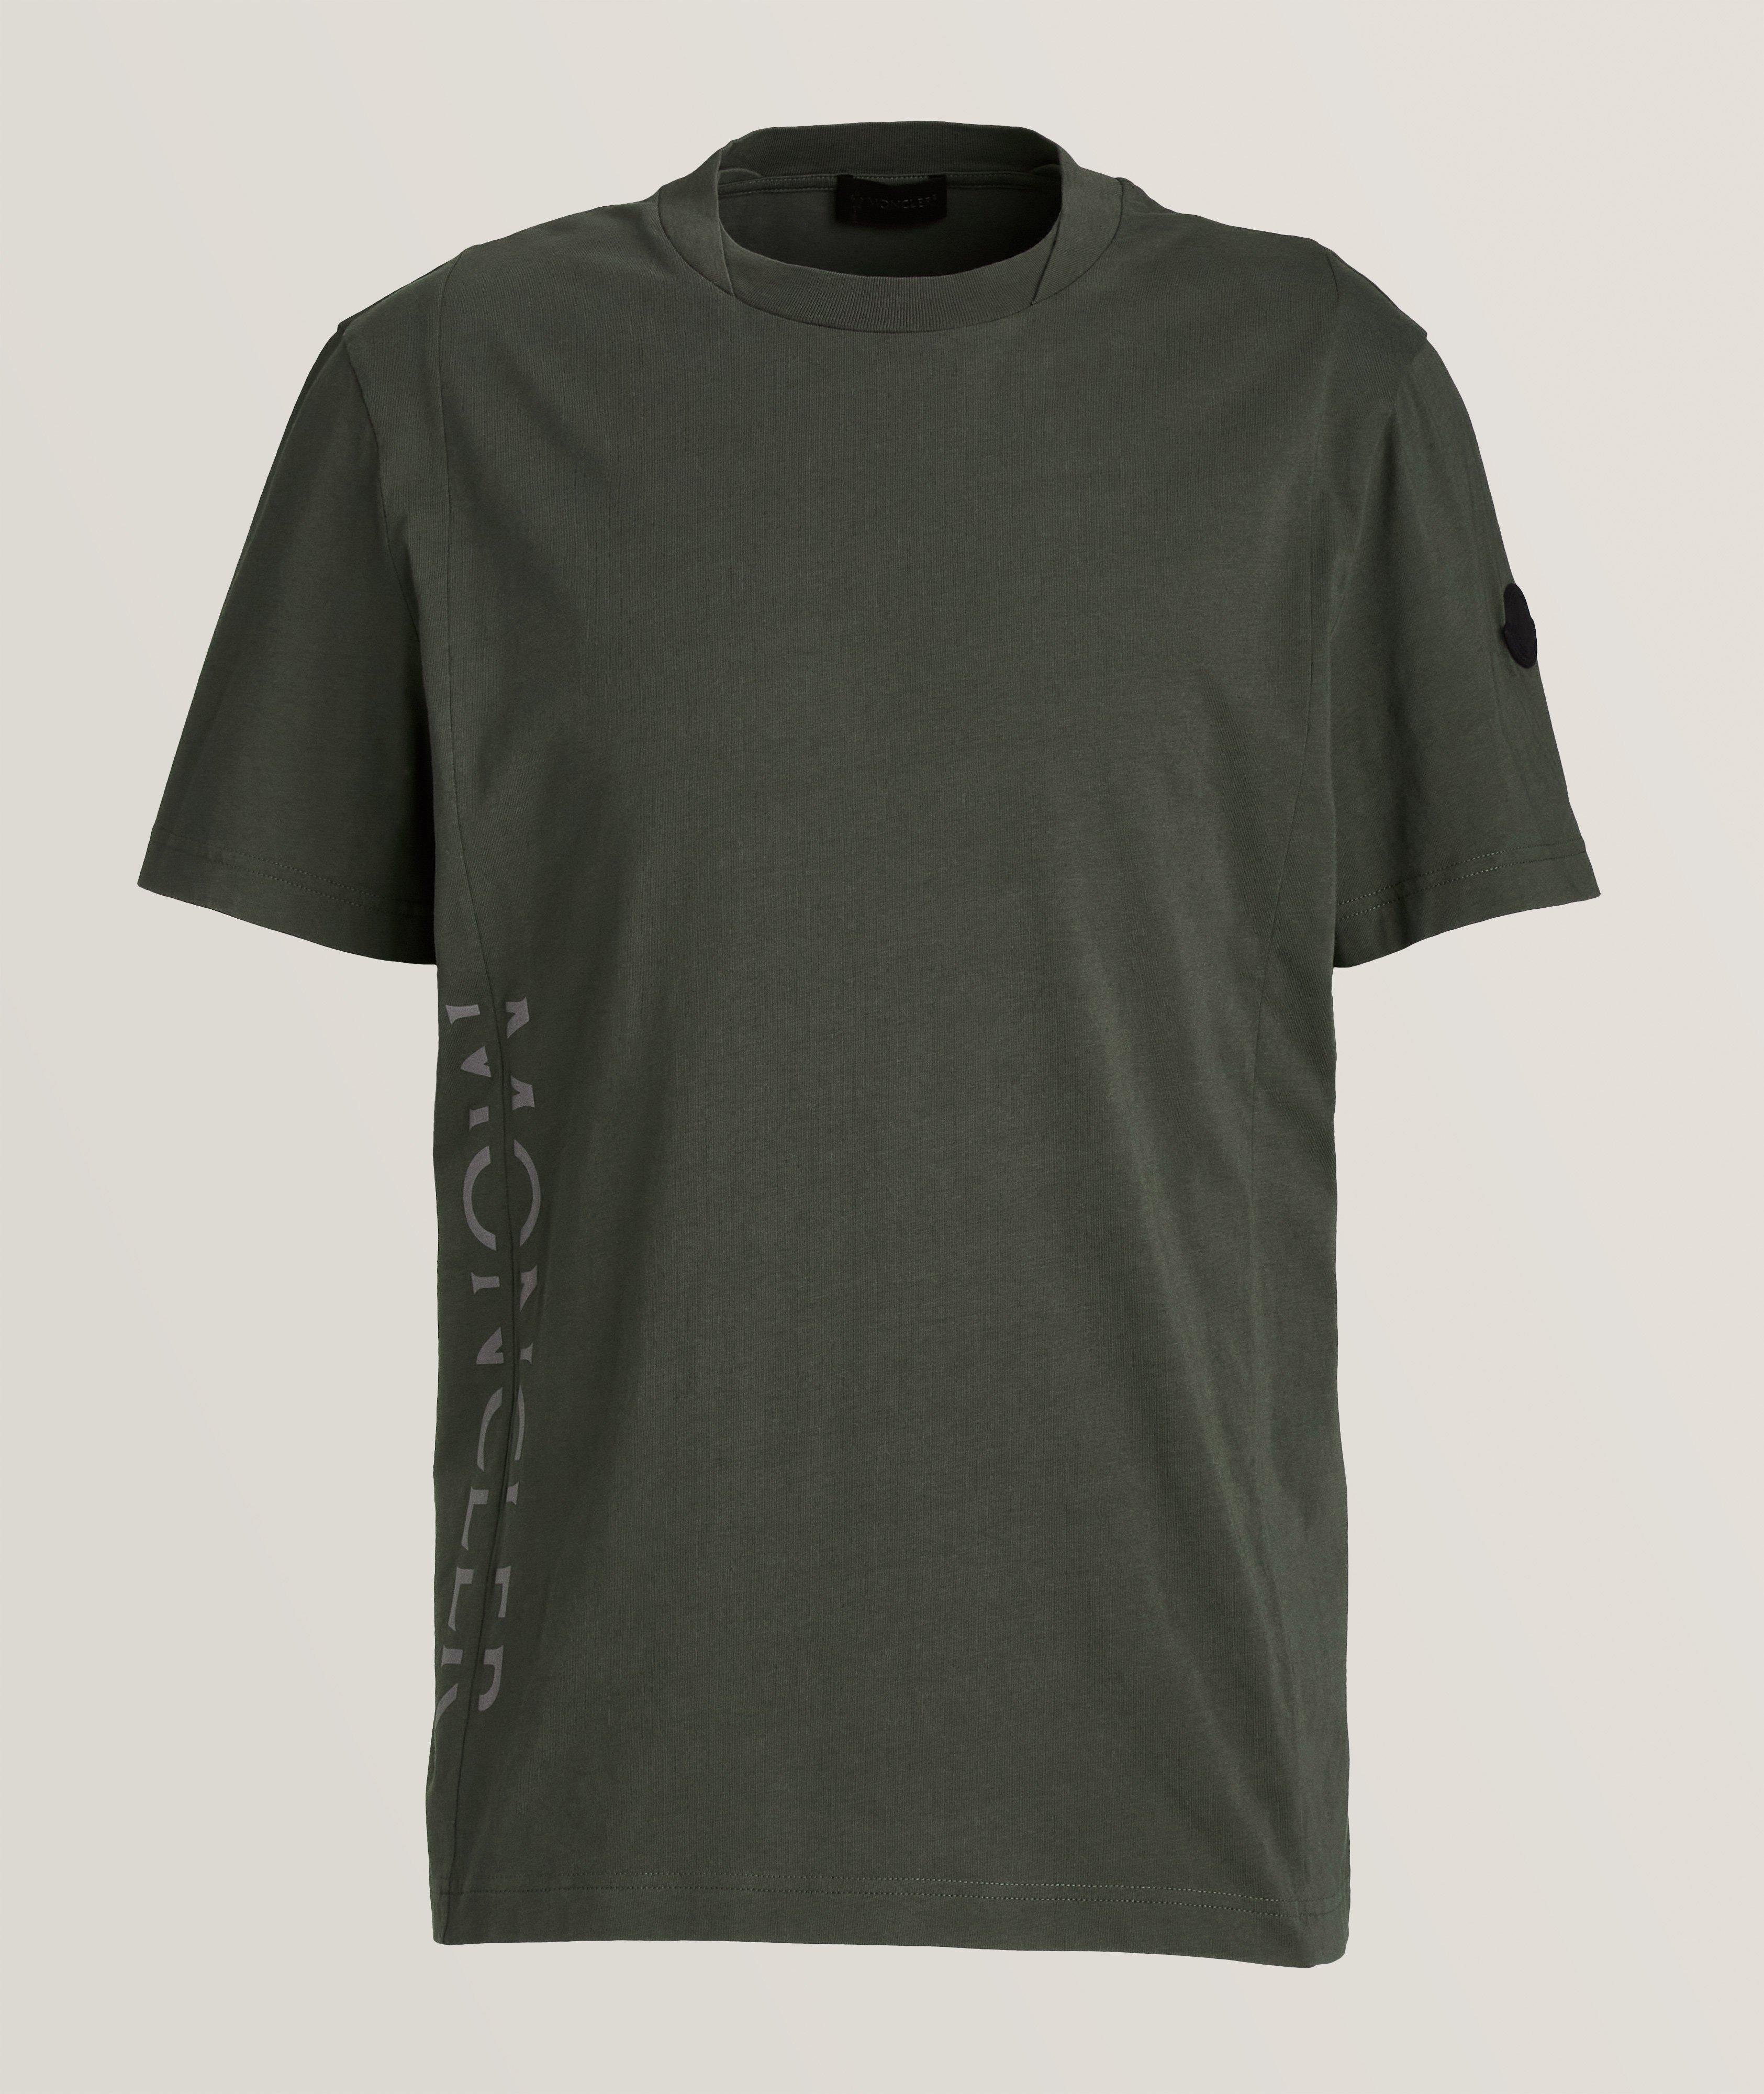 Short-Sleeve Text Print Cotton T-Shirt image 0